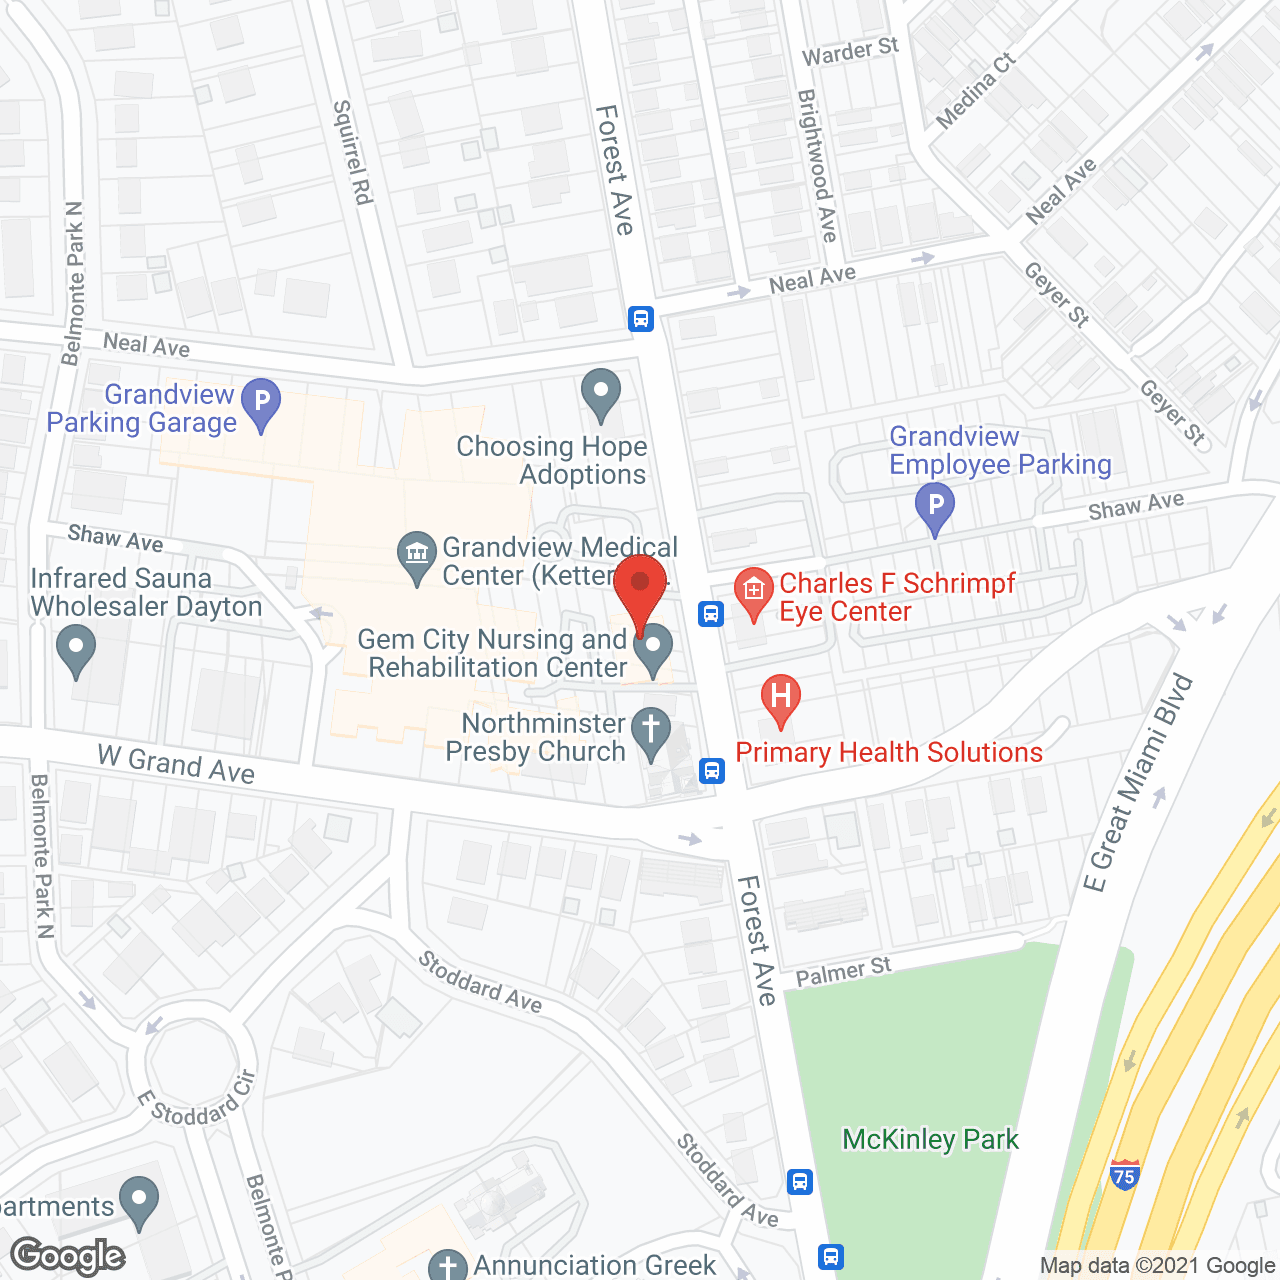 Gem City Nursing and Rehab Center in google map